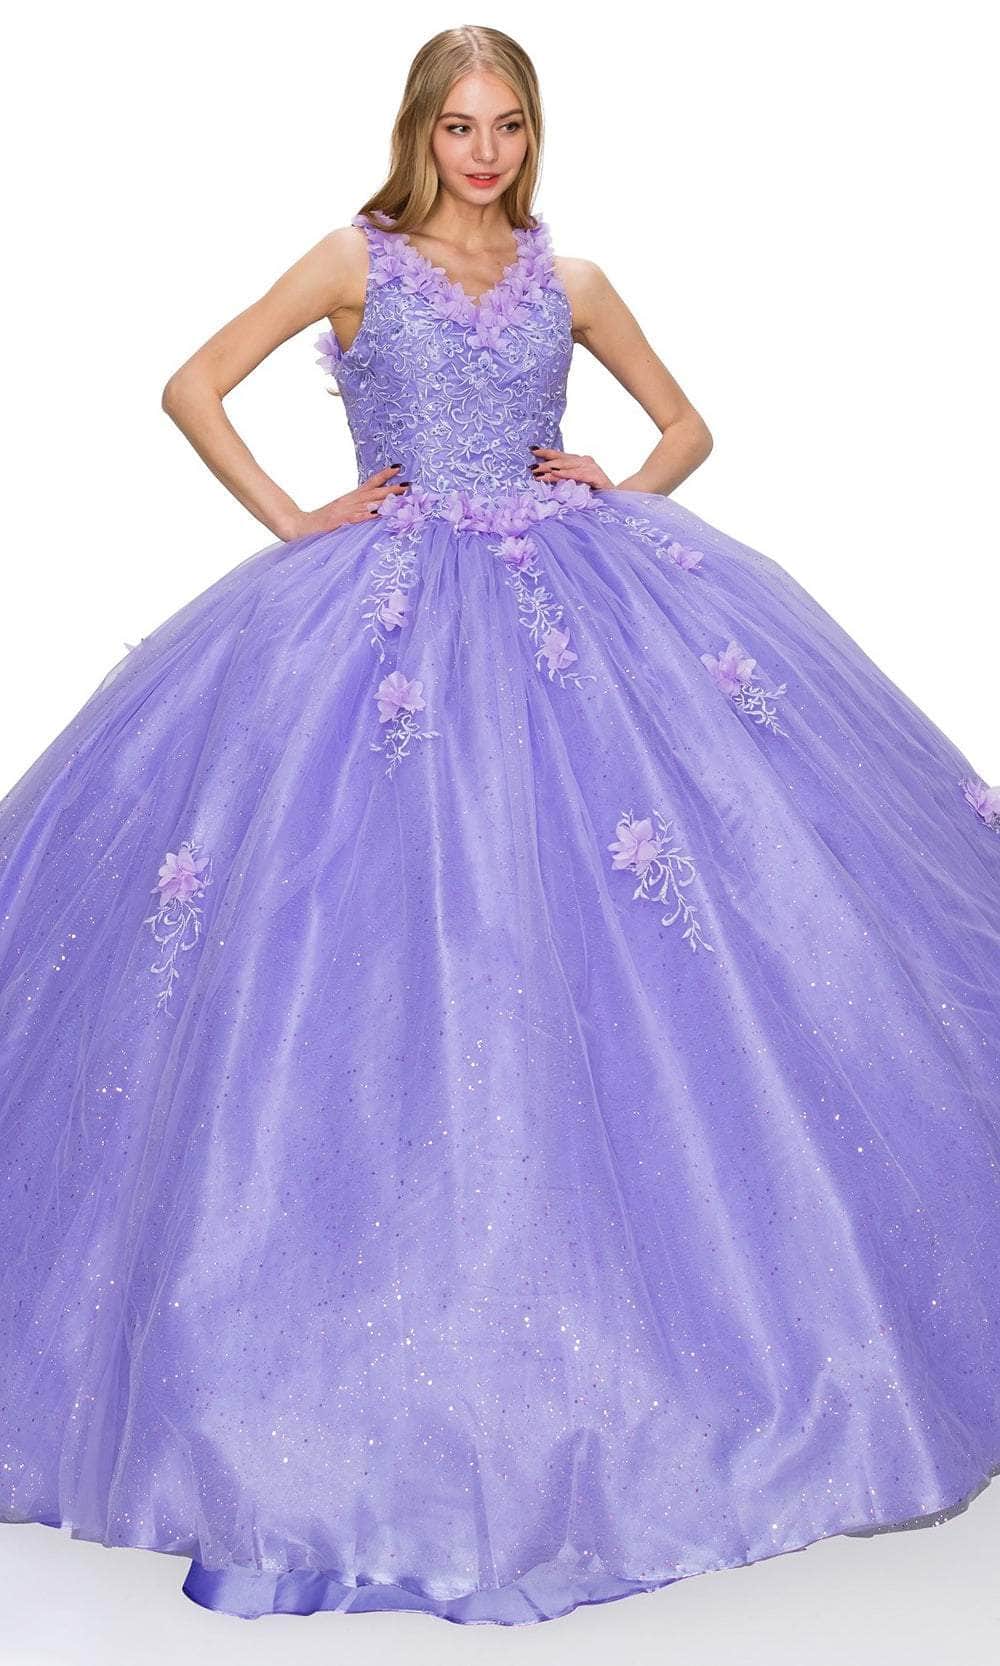 Cinderella Couture 8025J - 3D Floral Applique Sleeveless Ballgown
